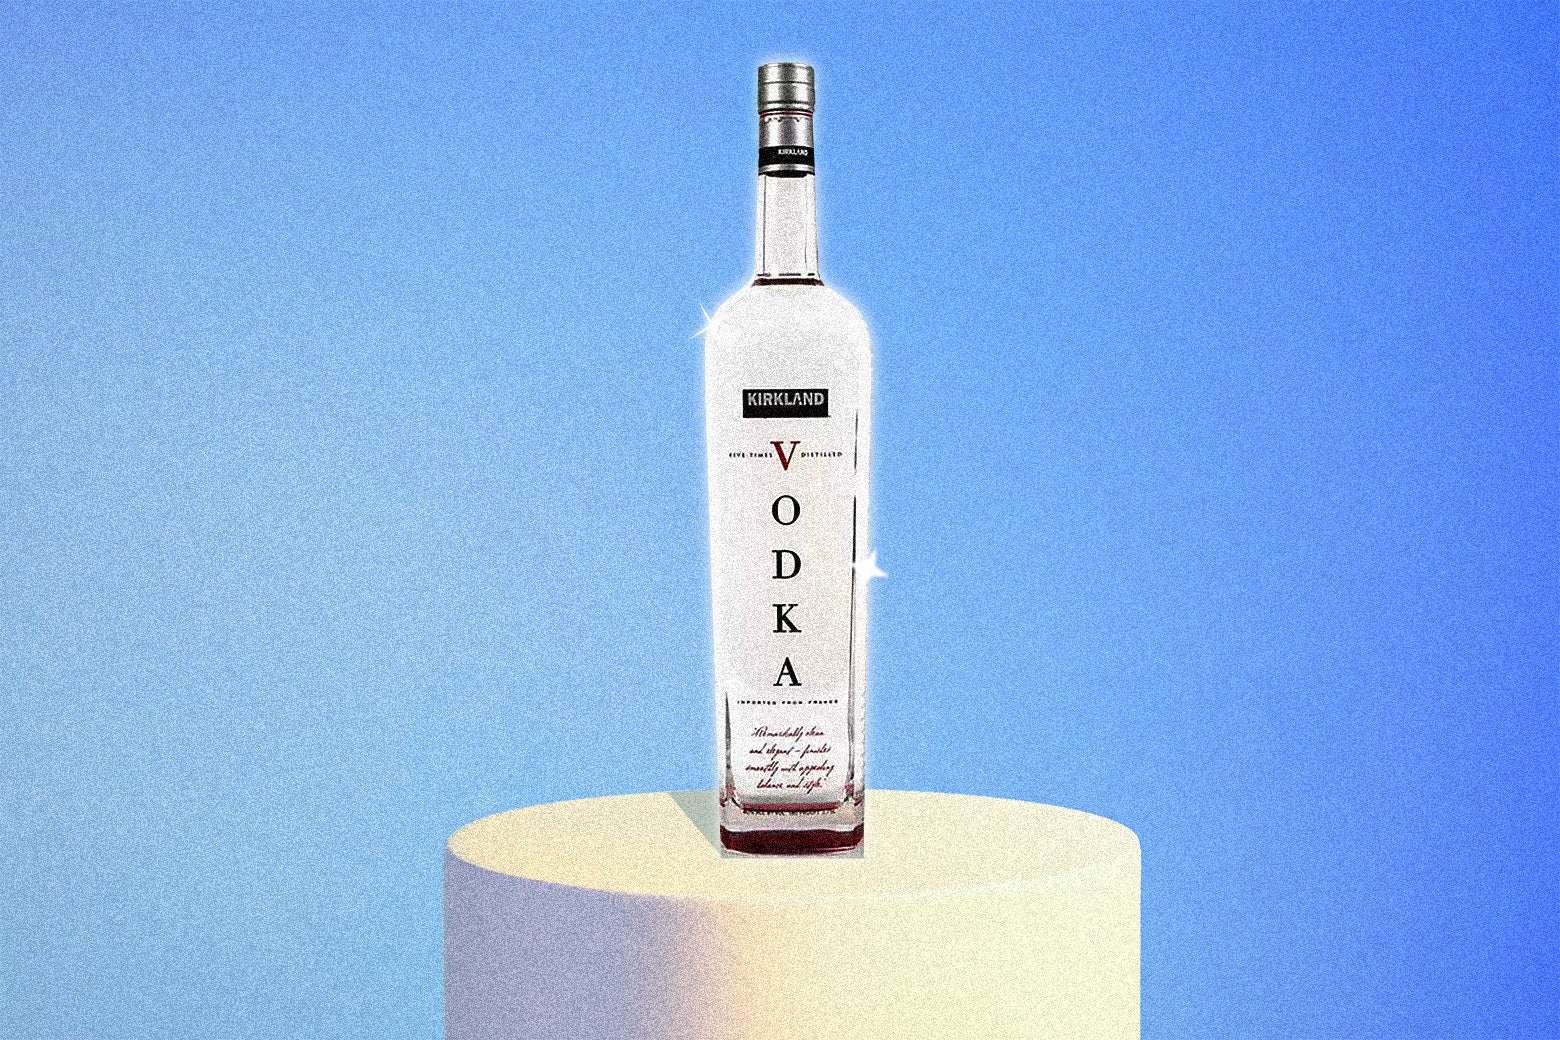 Costco's Kirkland Signature American Vodka, sparkling and atop a pedestal.